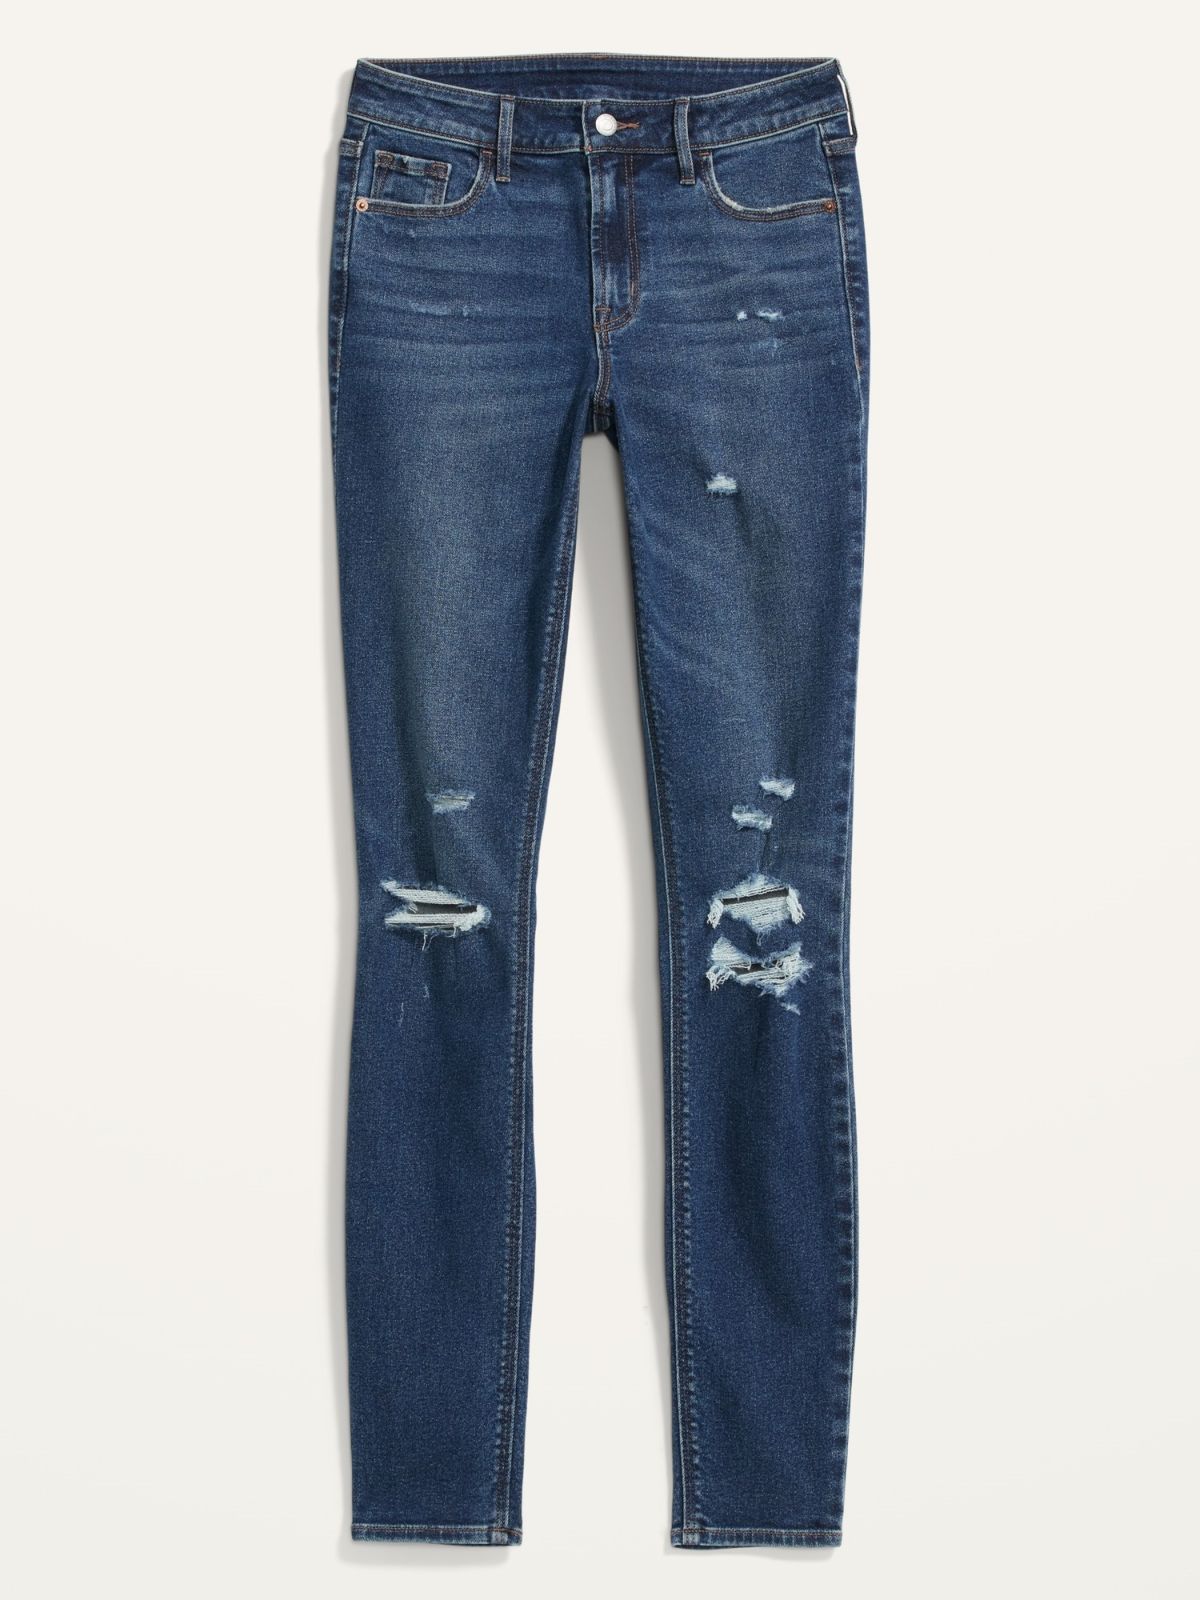  ג'ינס סקיני ארוך עם קרעים של OLD NAVY